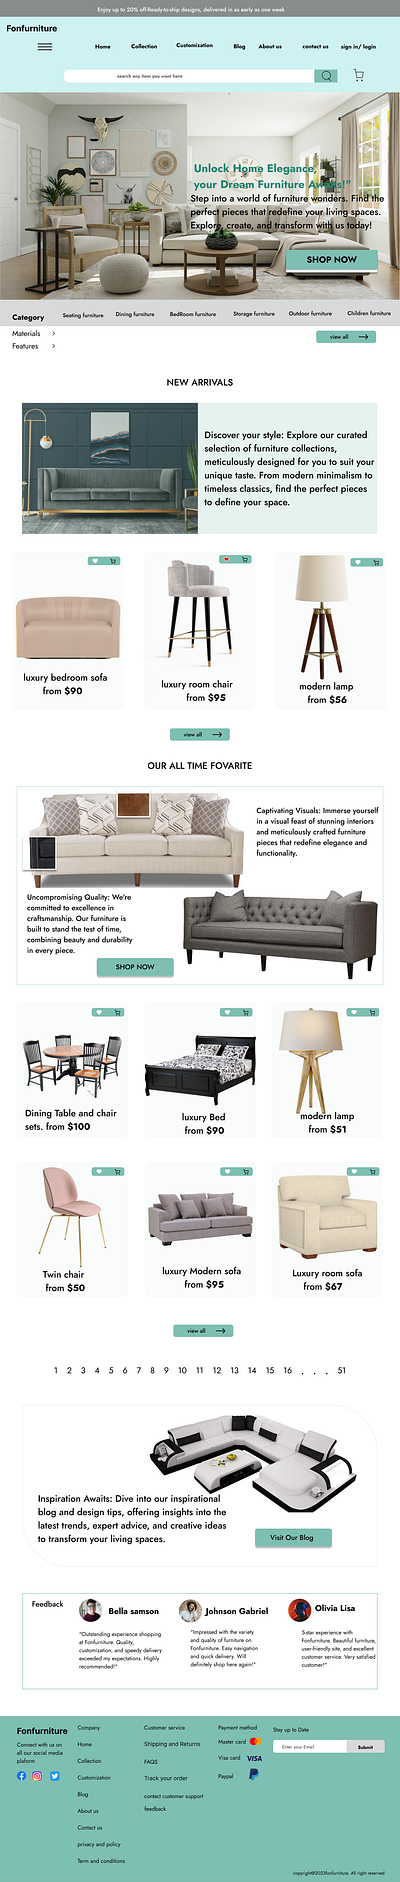 Landing page for a furniture website uiux web design